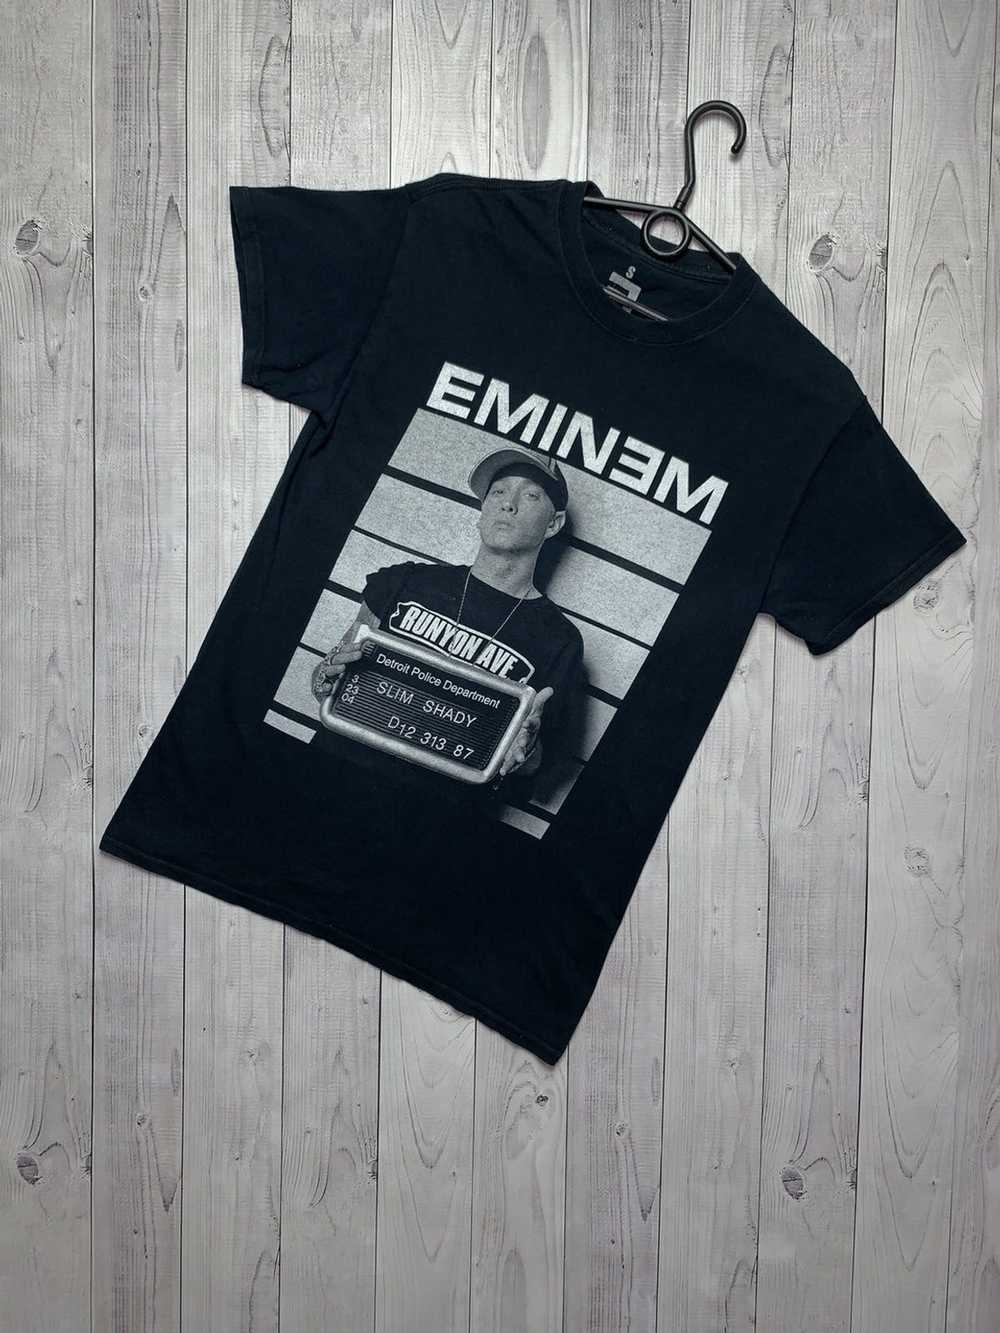 Eminem The Real Slim Shady Shirt Promo Bootleg Rap Tee